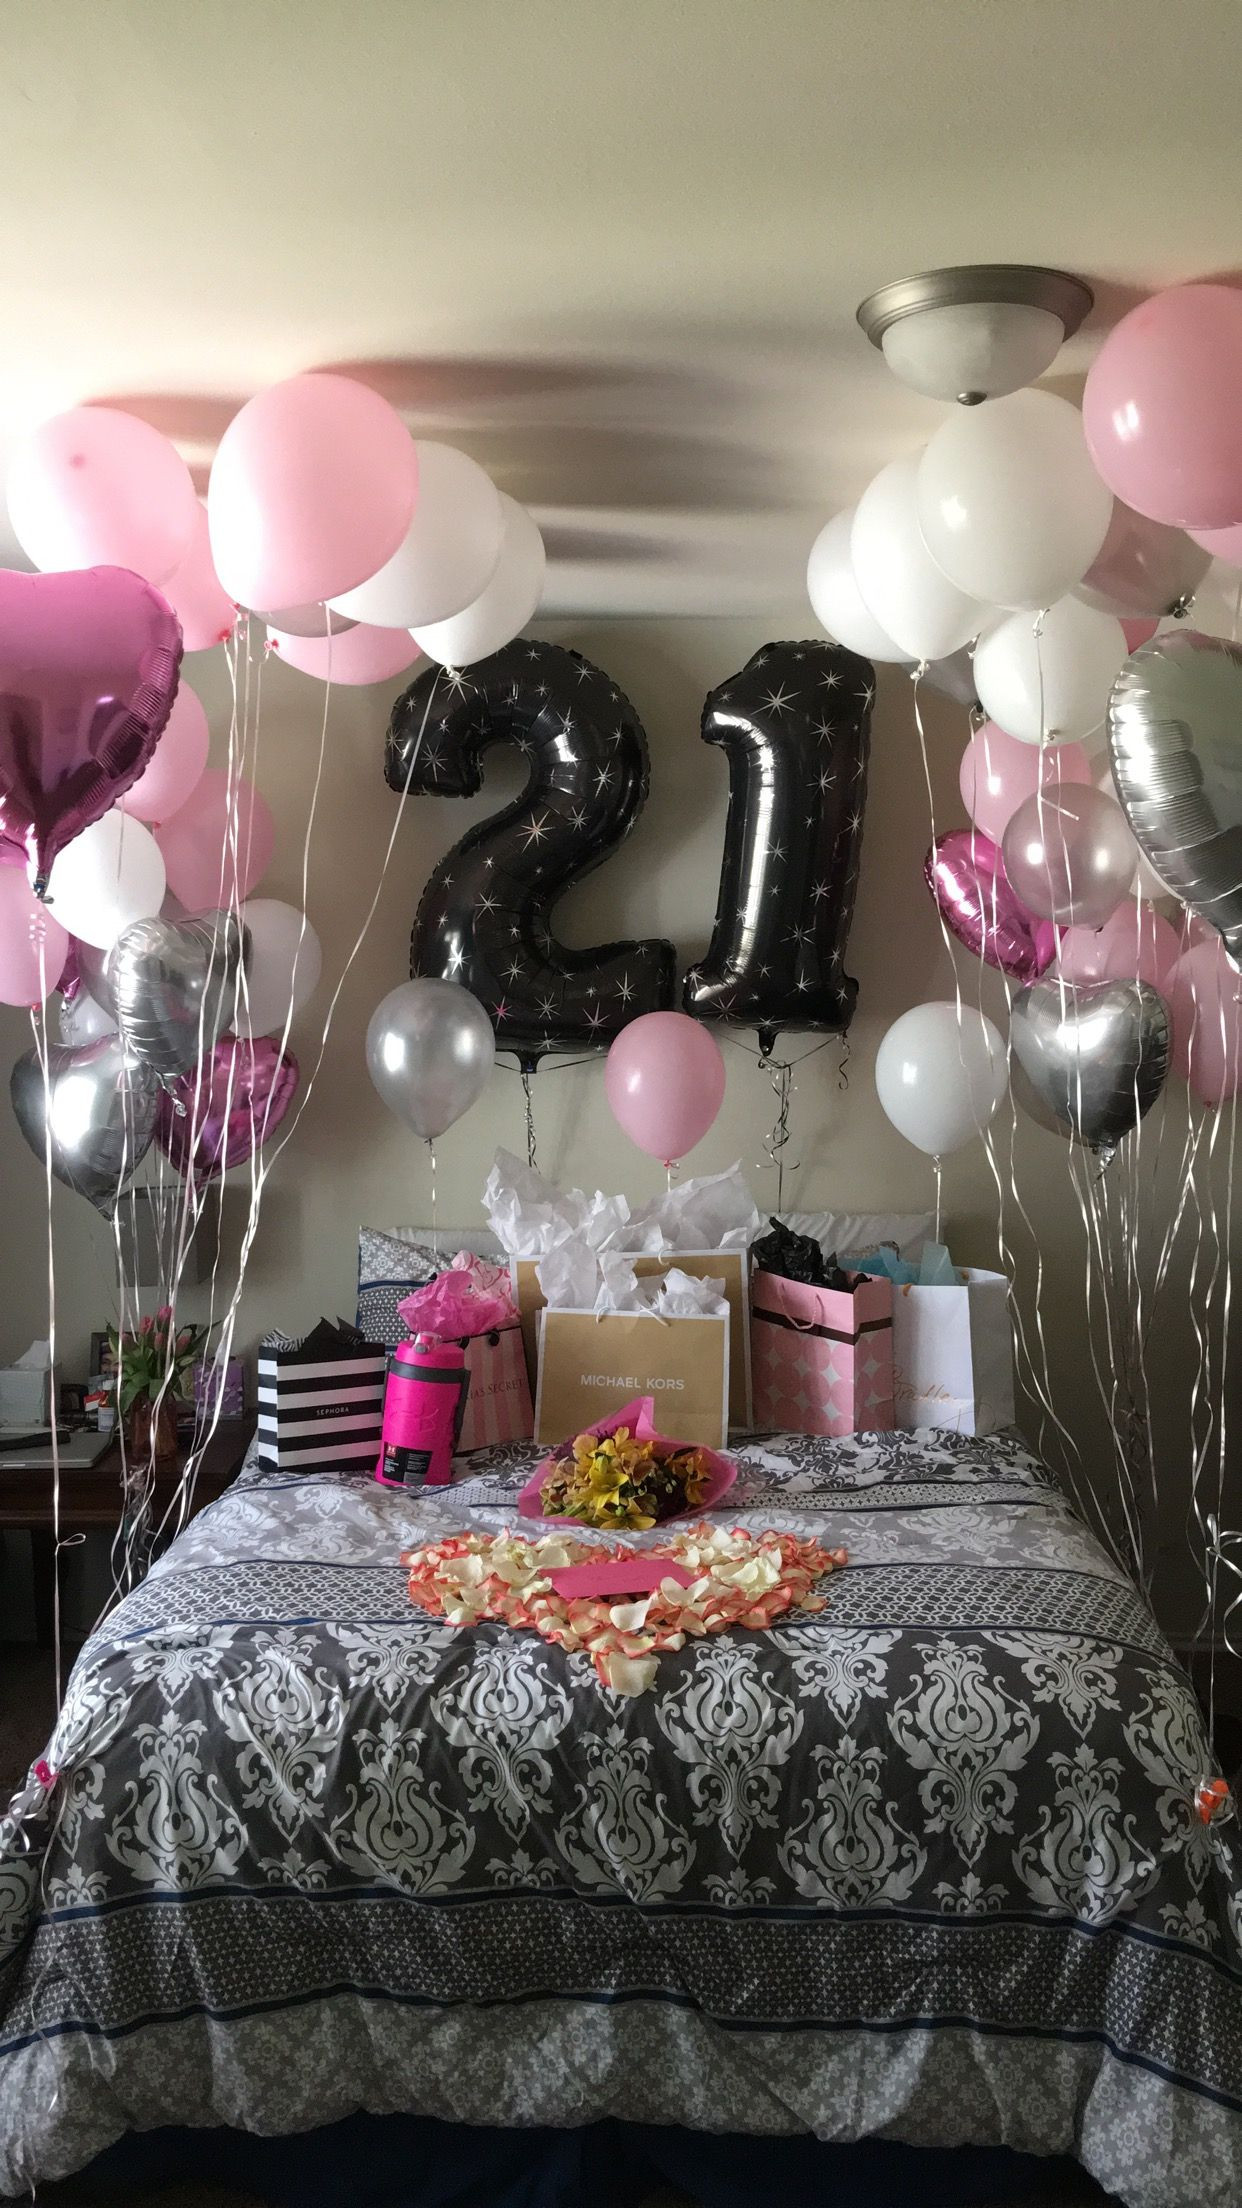 Girlfriends Birthday Gift Ideas
 Pin on Girlfriends Birthday